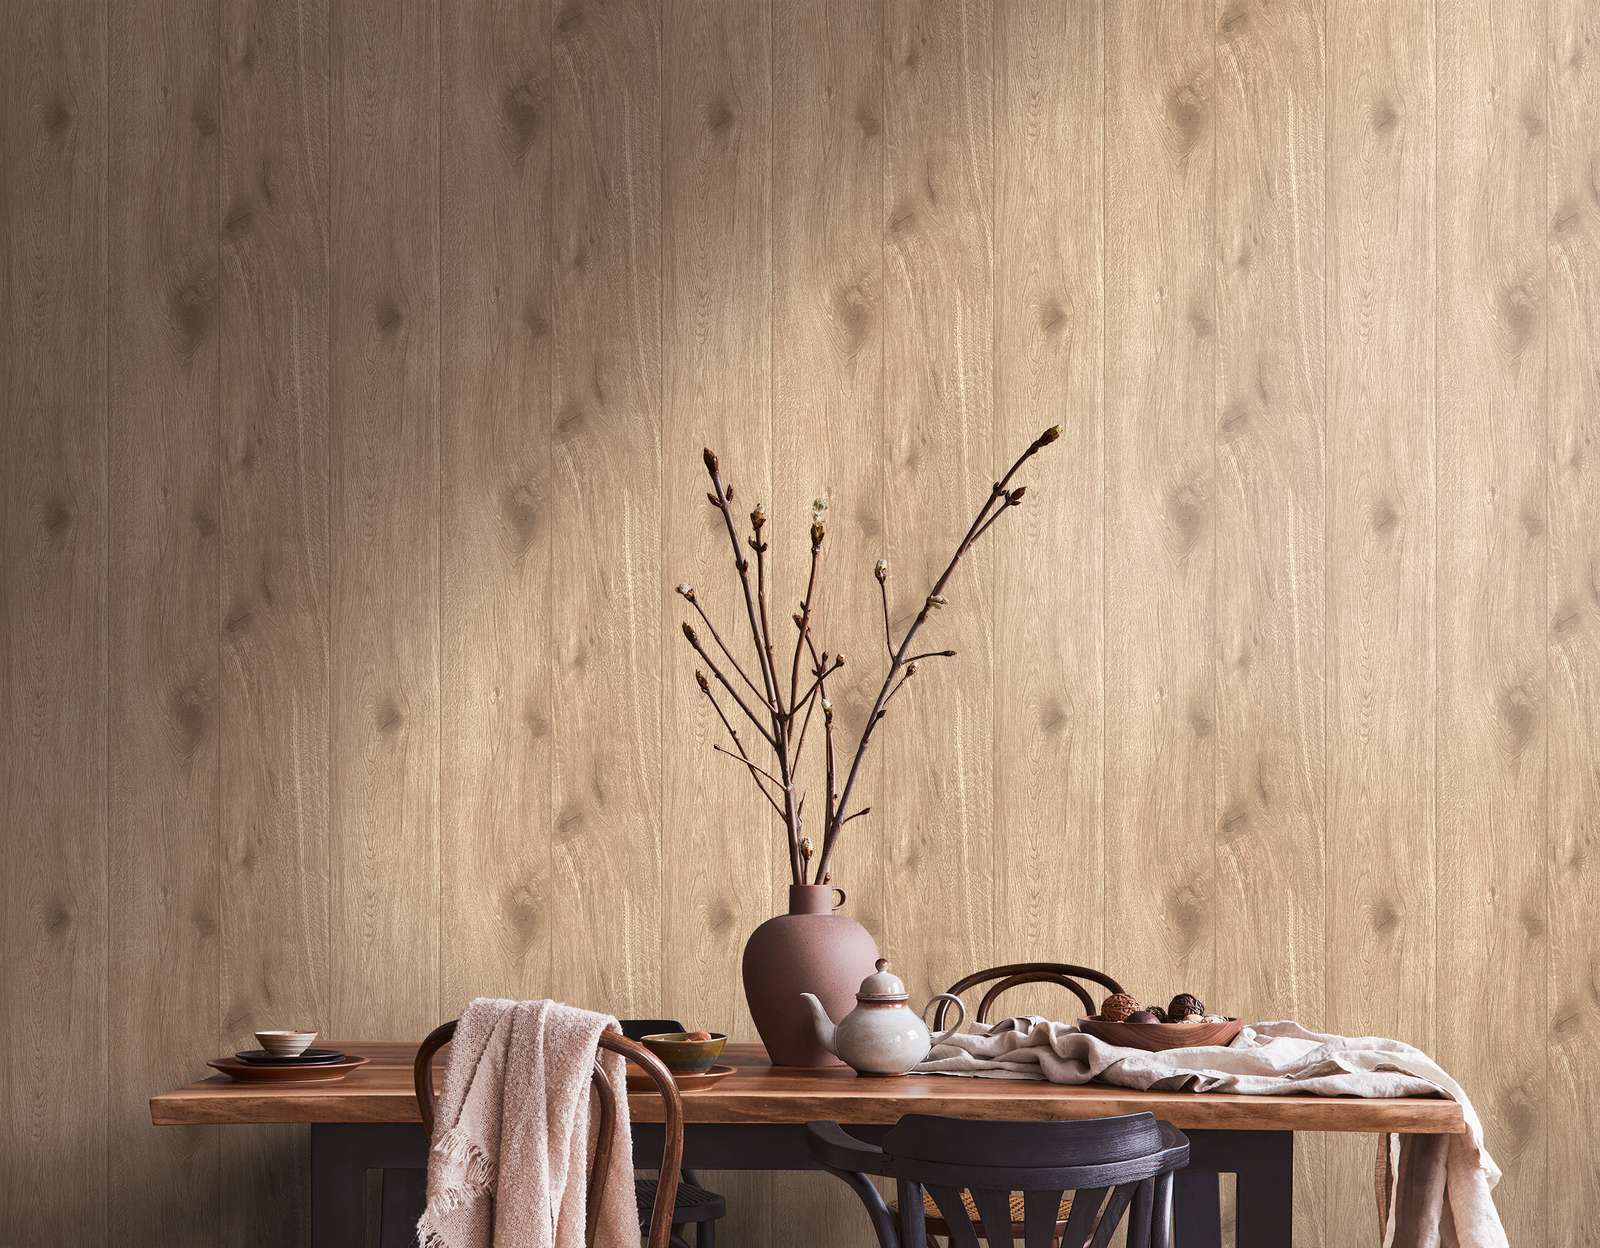             Light brown wallpaper wood look with grain - brown, beige
        